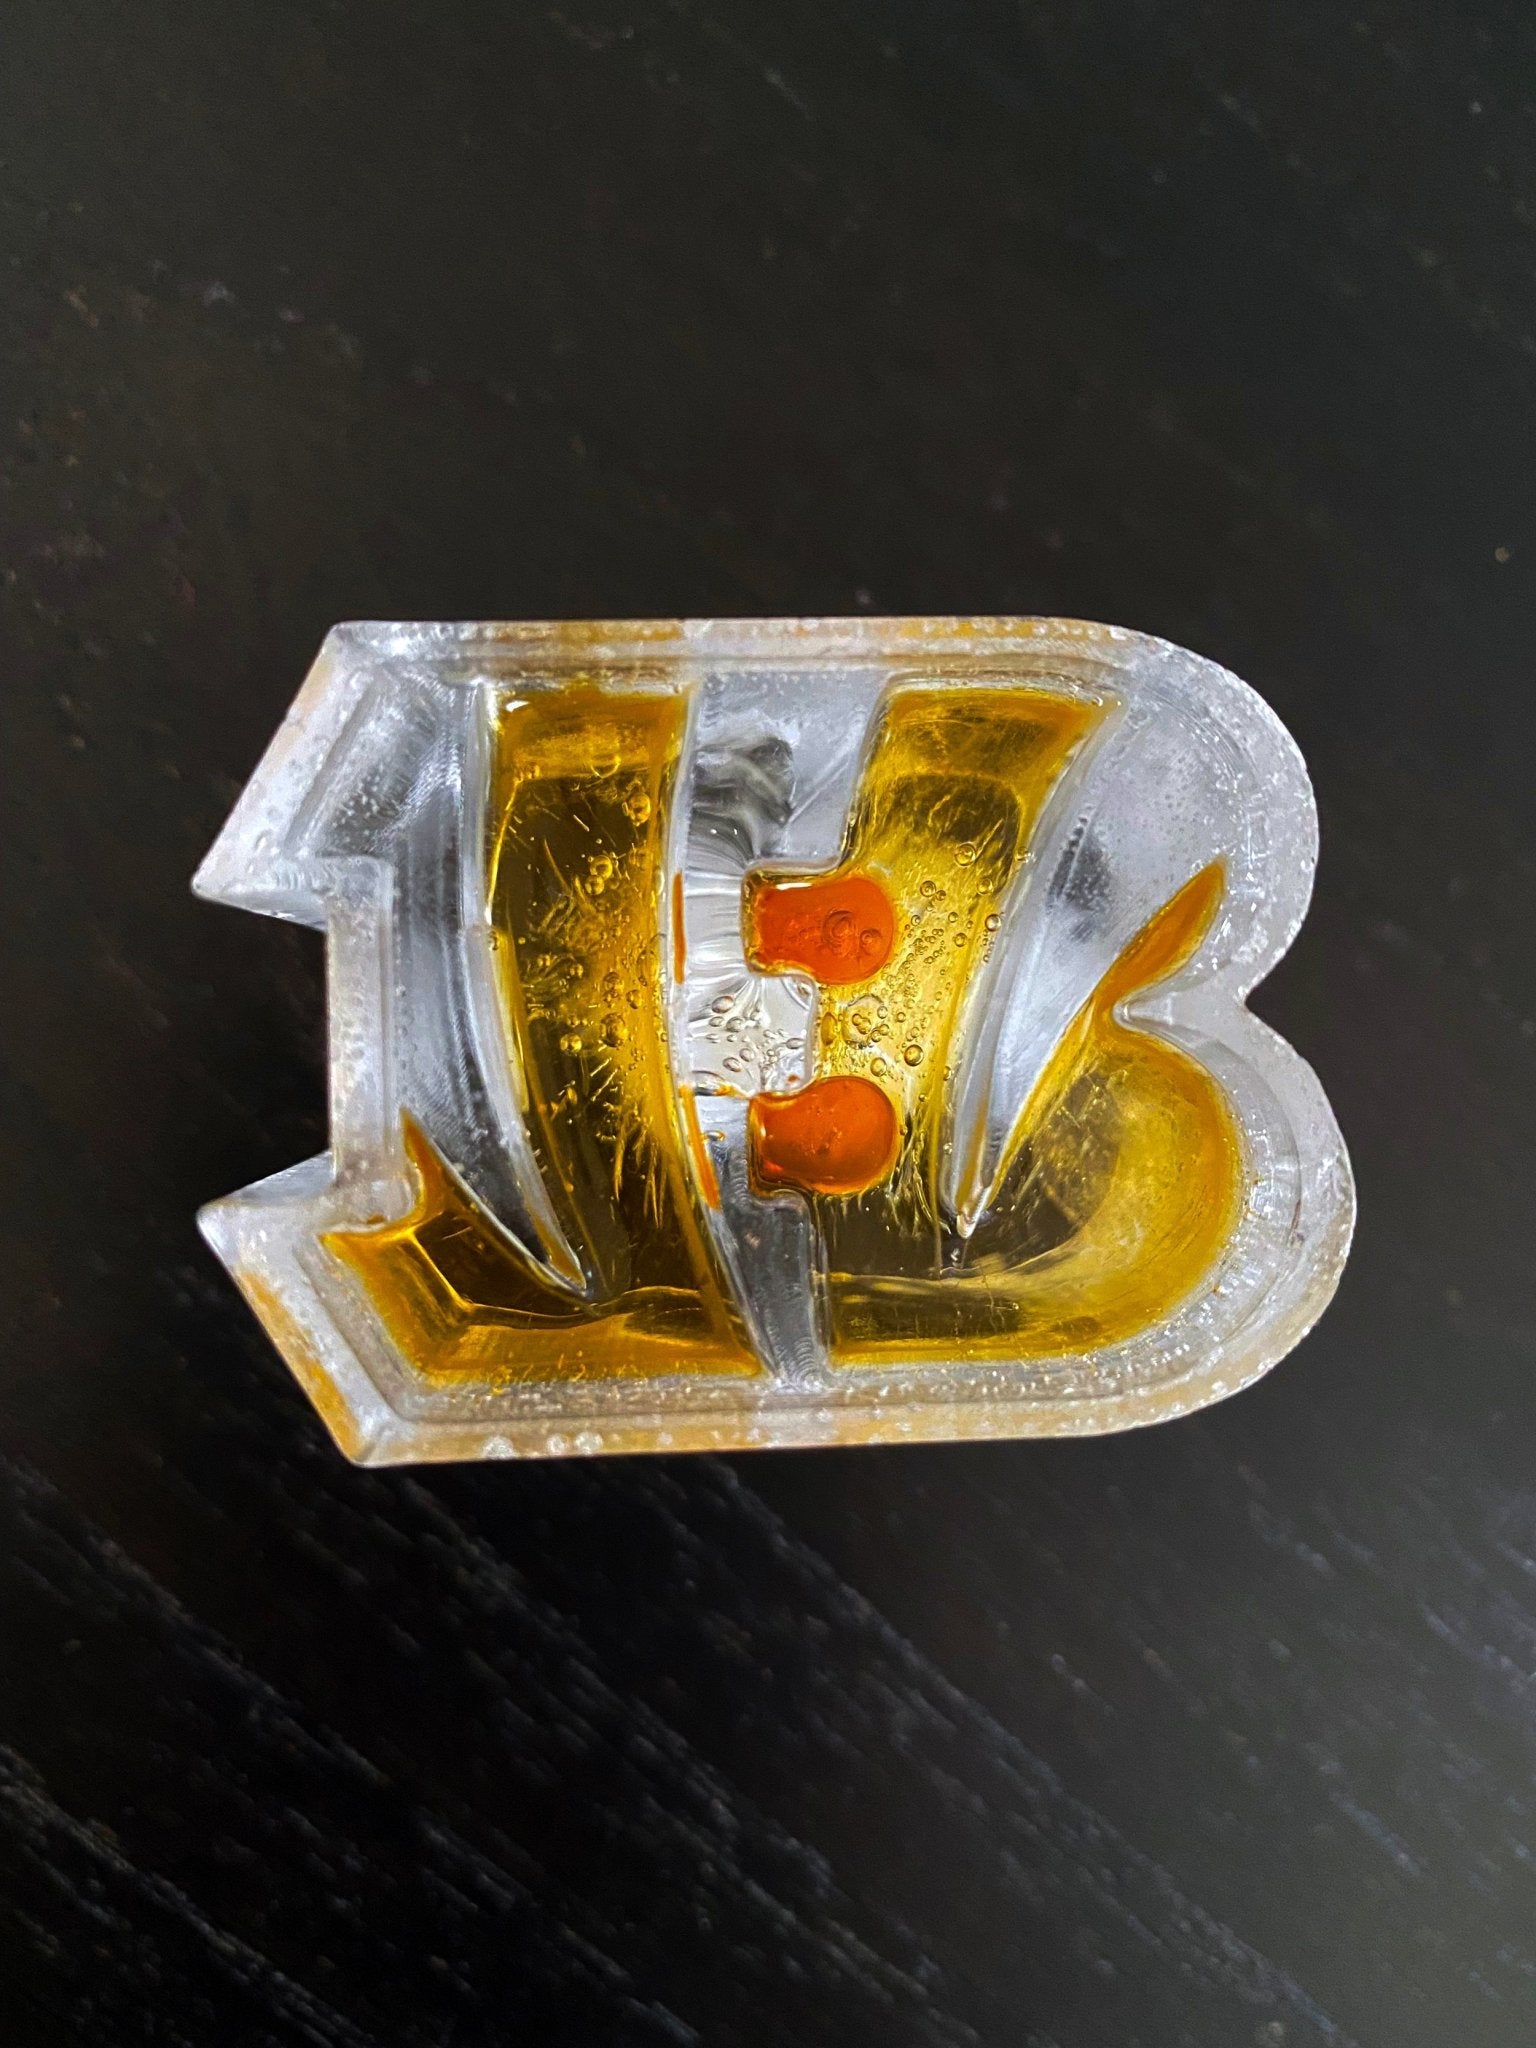 College Football Logo Whiskey Ice Mold, Custom College Logo